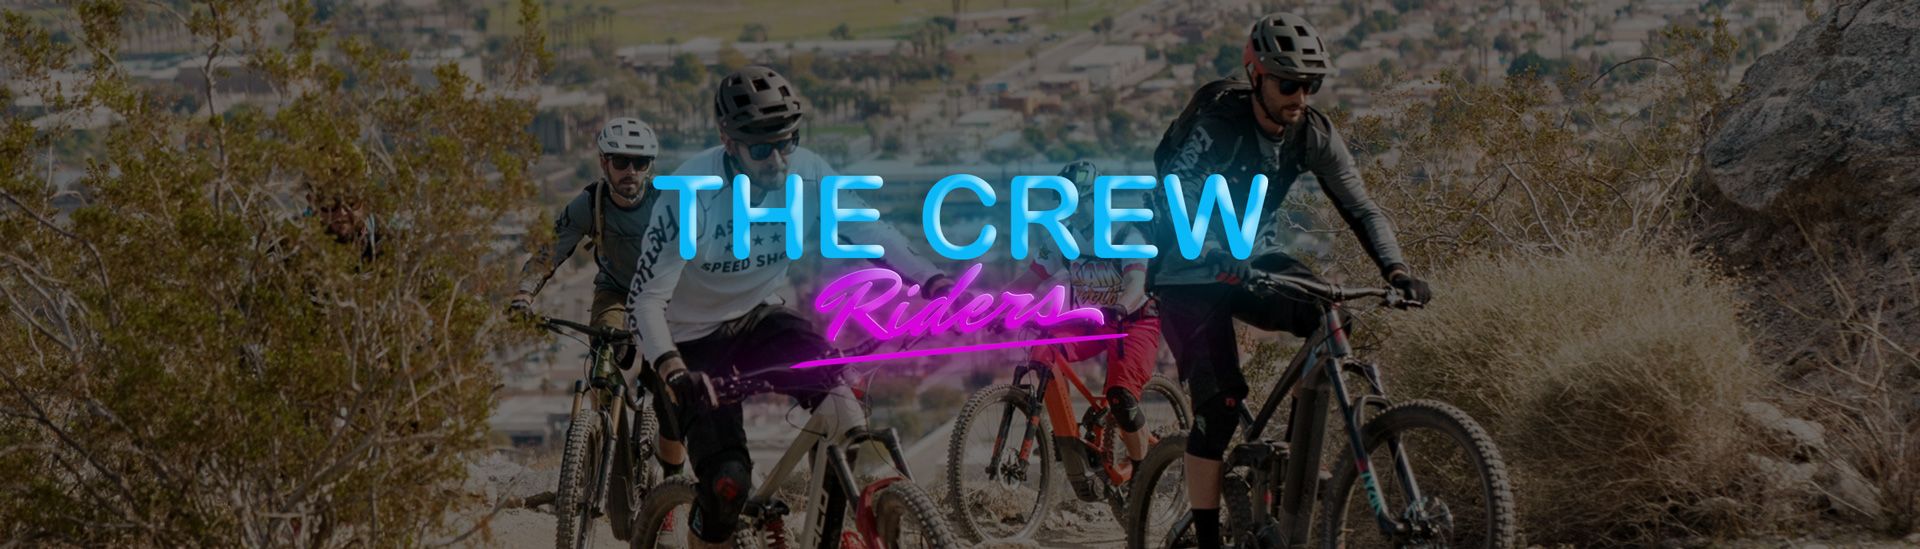 2020 eMTB Roundup: The Crew - Riders